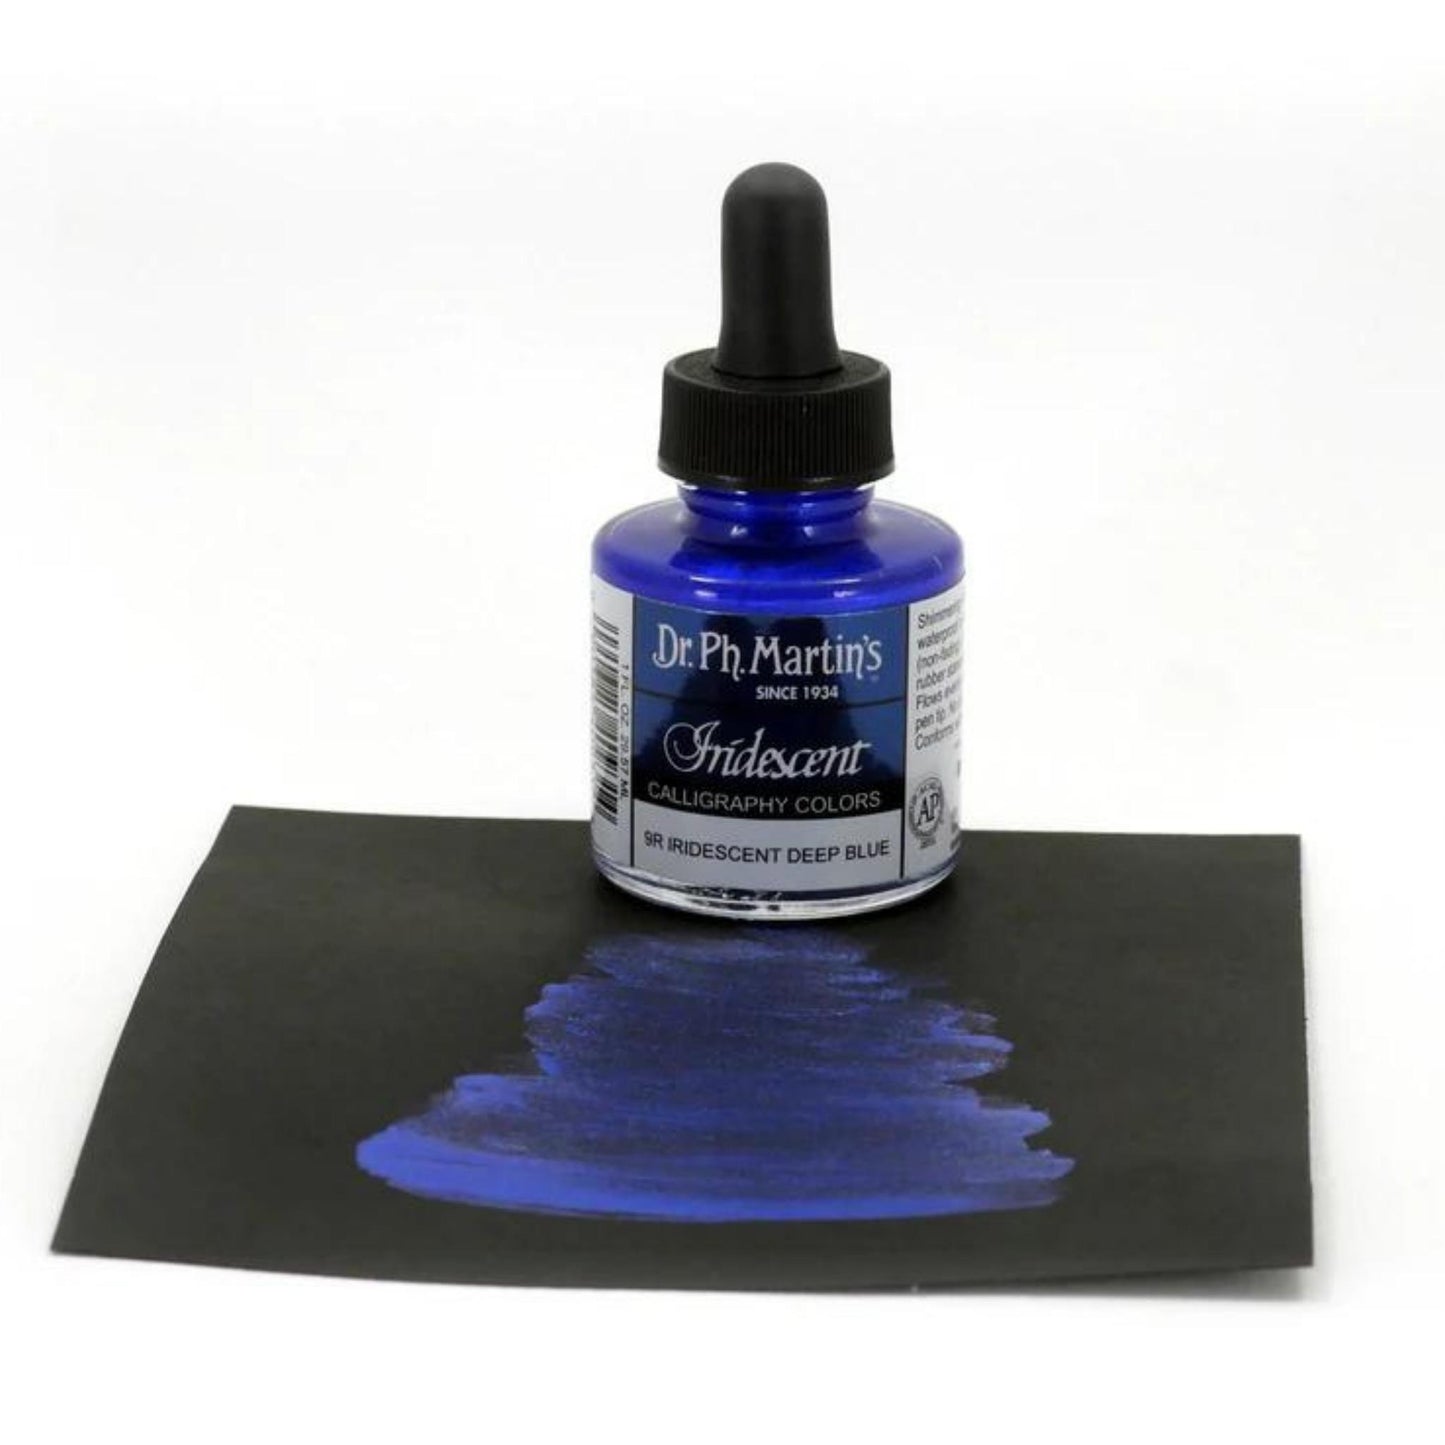 Dr.Ph.Martins - Iridescent Calligraphy: 9R Iridescent Deep Blue